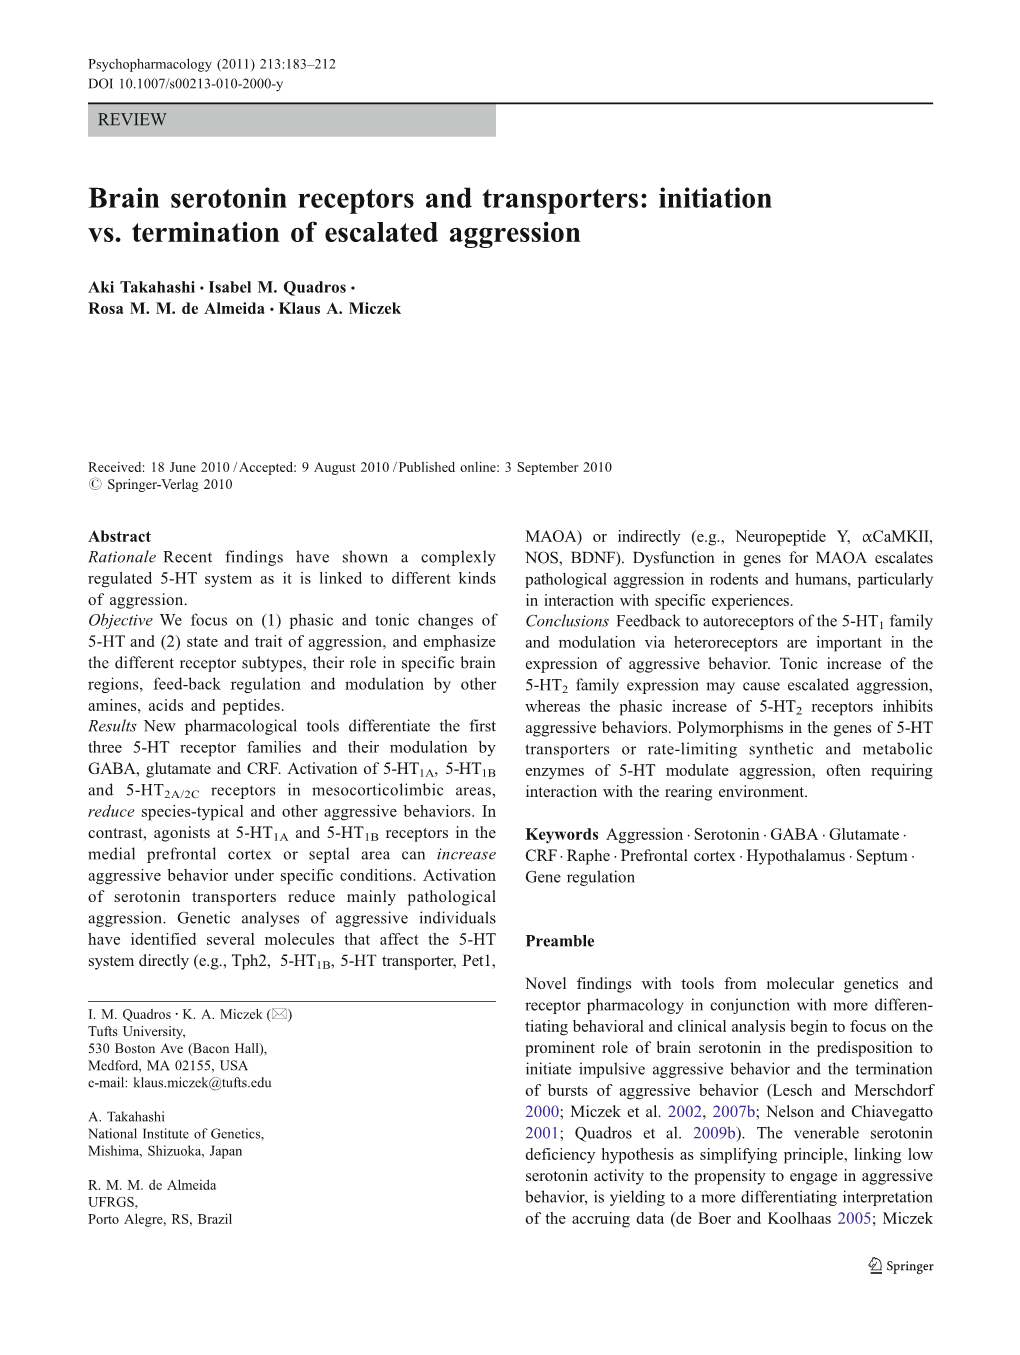 Brain Serotonin Receptors and Transporters: Initiation Vs